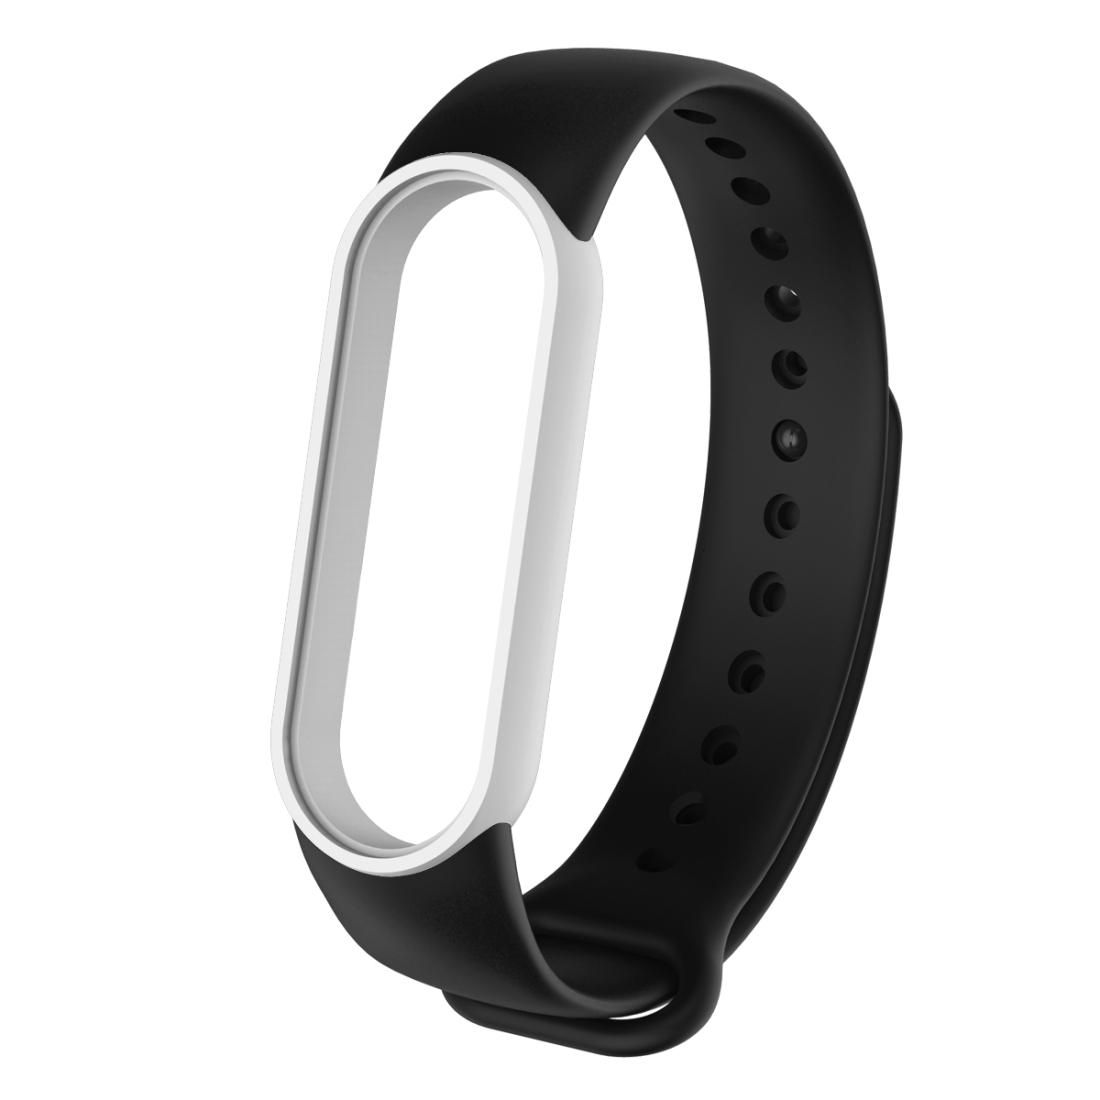 For Xiaomi Mi Band 5 Silicone Replacement Strap Watchband (Orange Black)